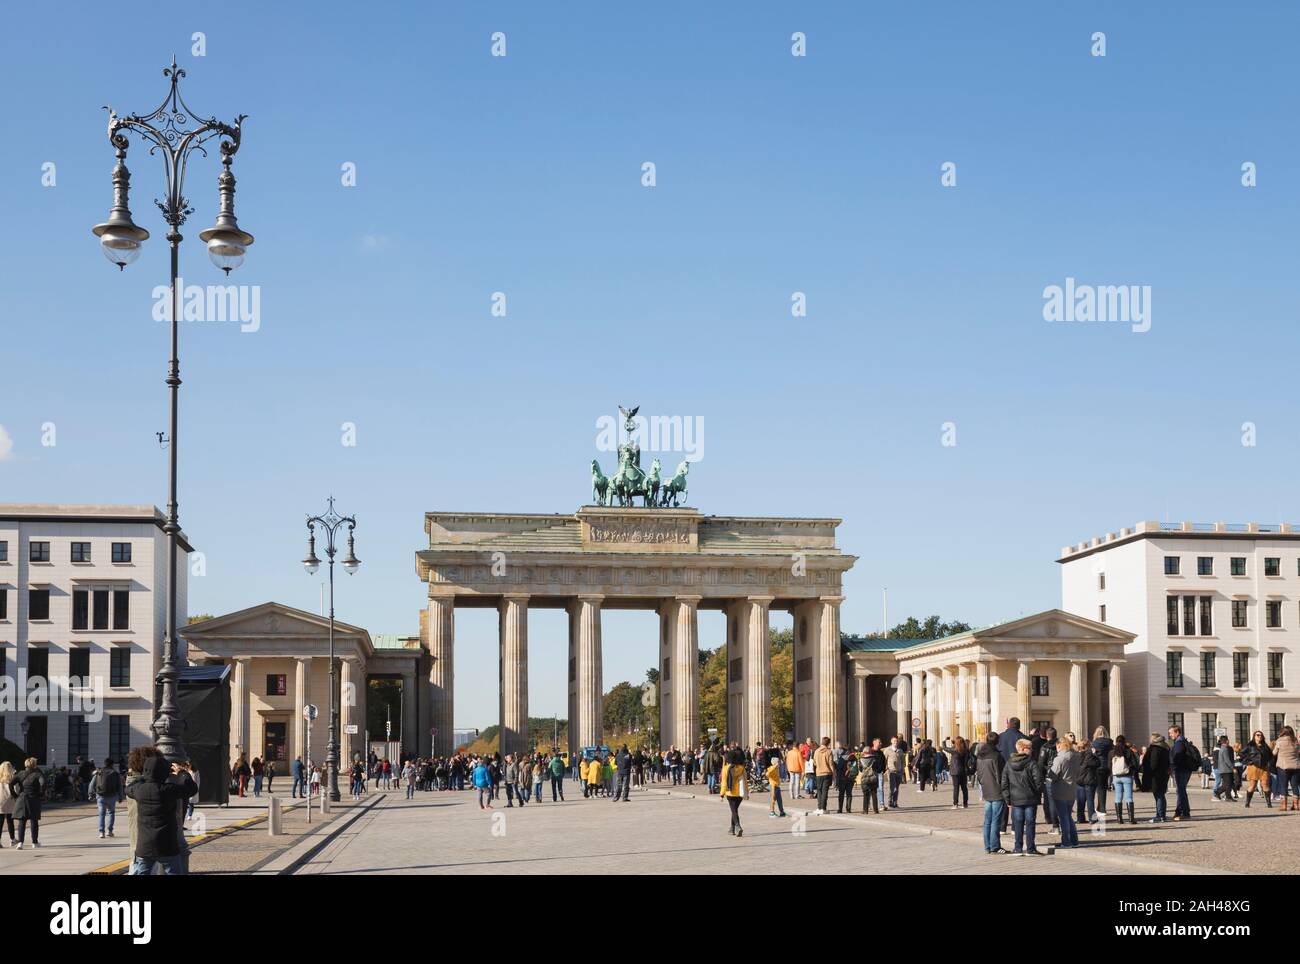 Germany, Berlin, Pedestrians in front of Brandenburg Gate Stock Photo